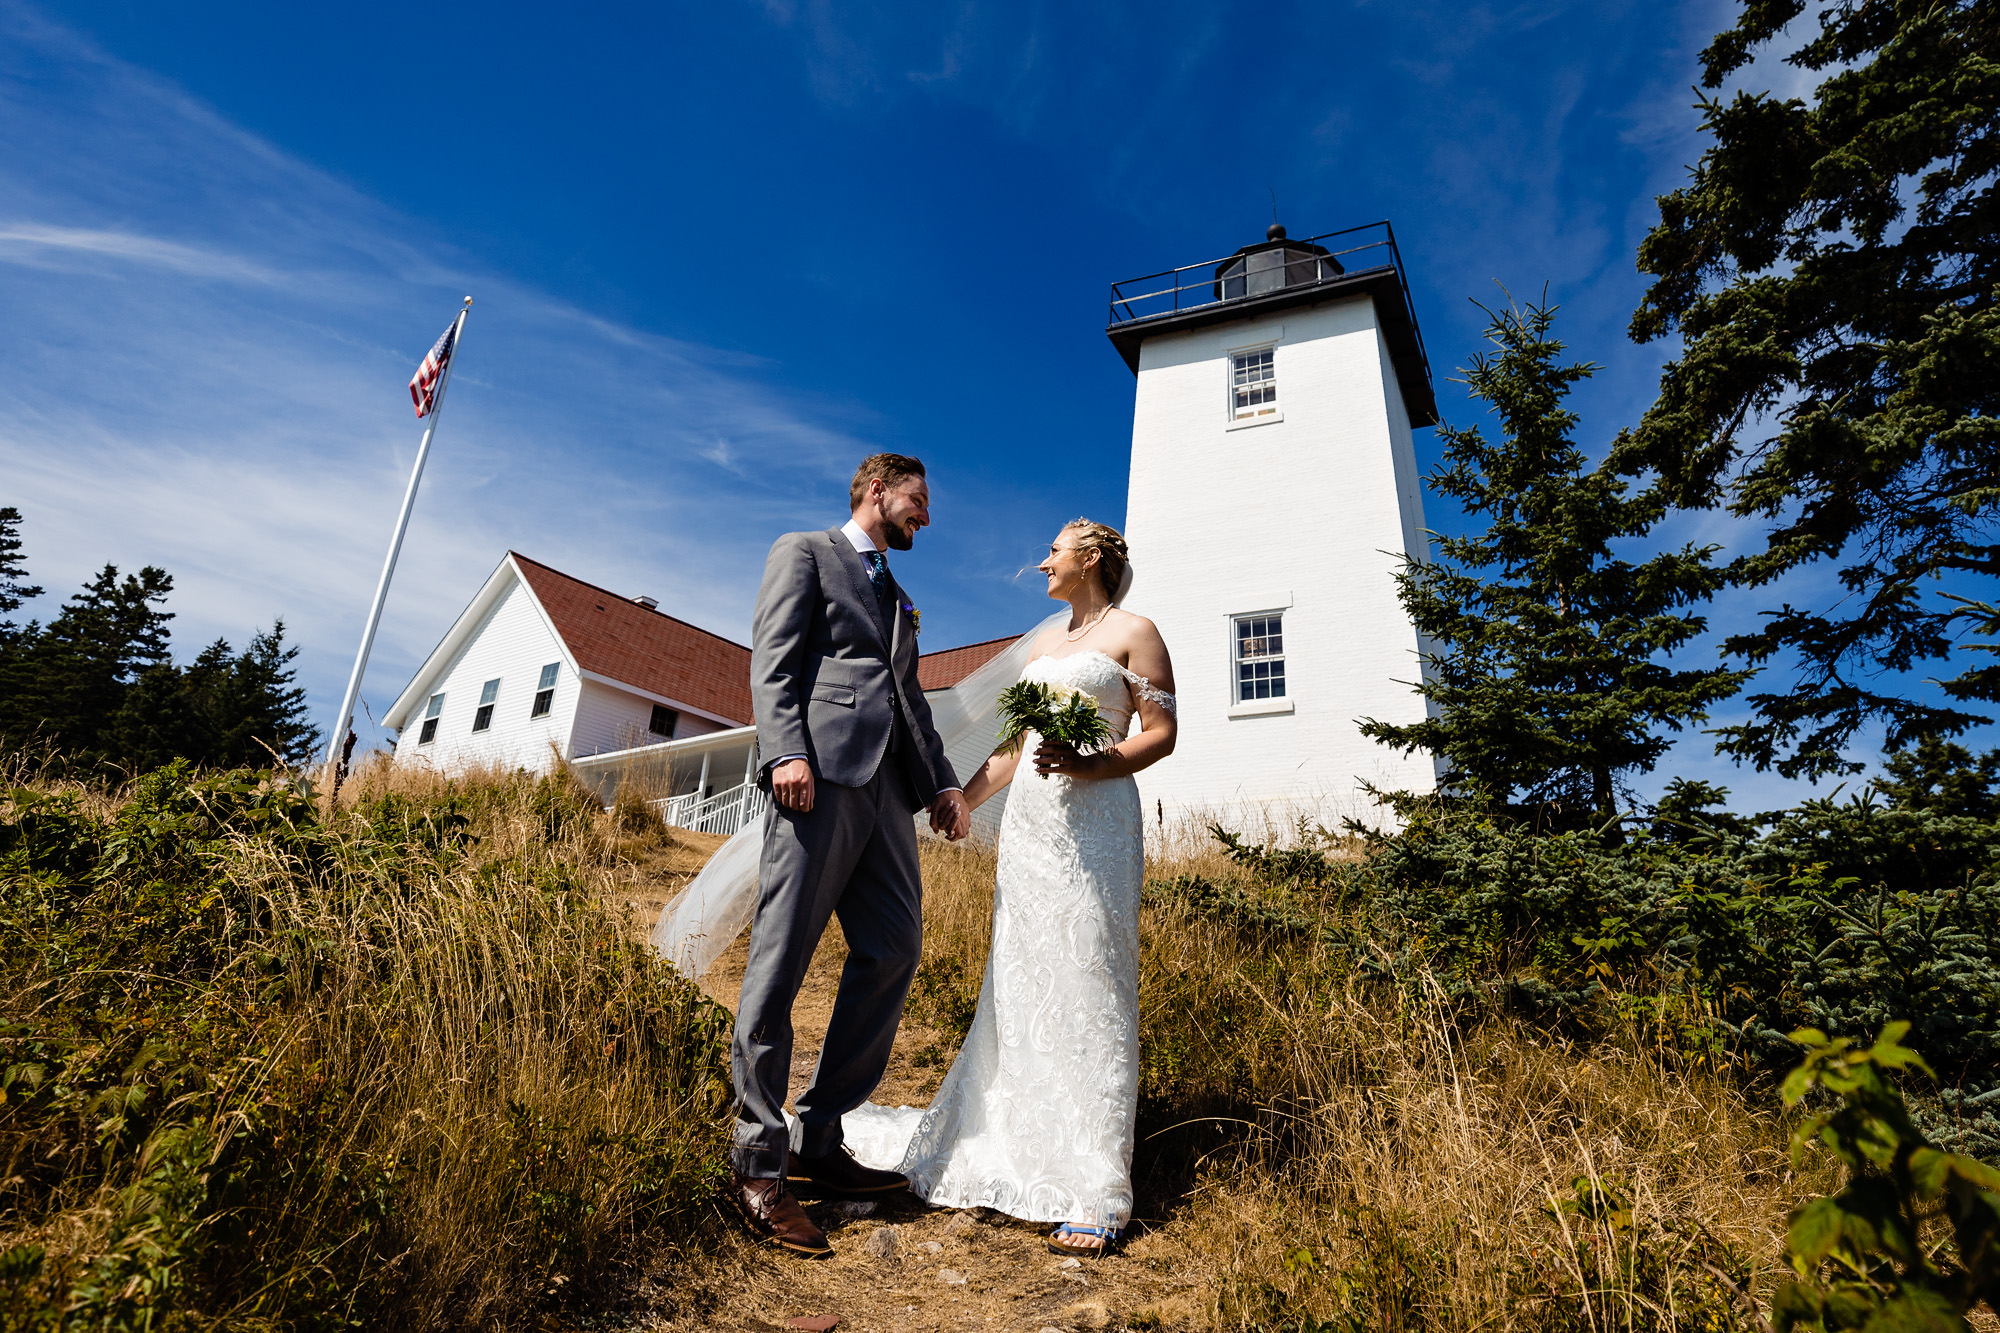 Wedding portraits taken at Burnt Coat Lighthouse on Swans Island, Maine